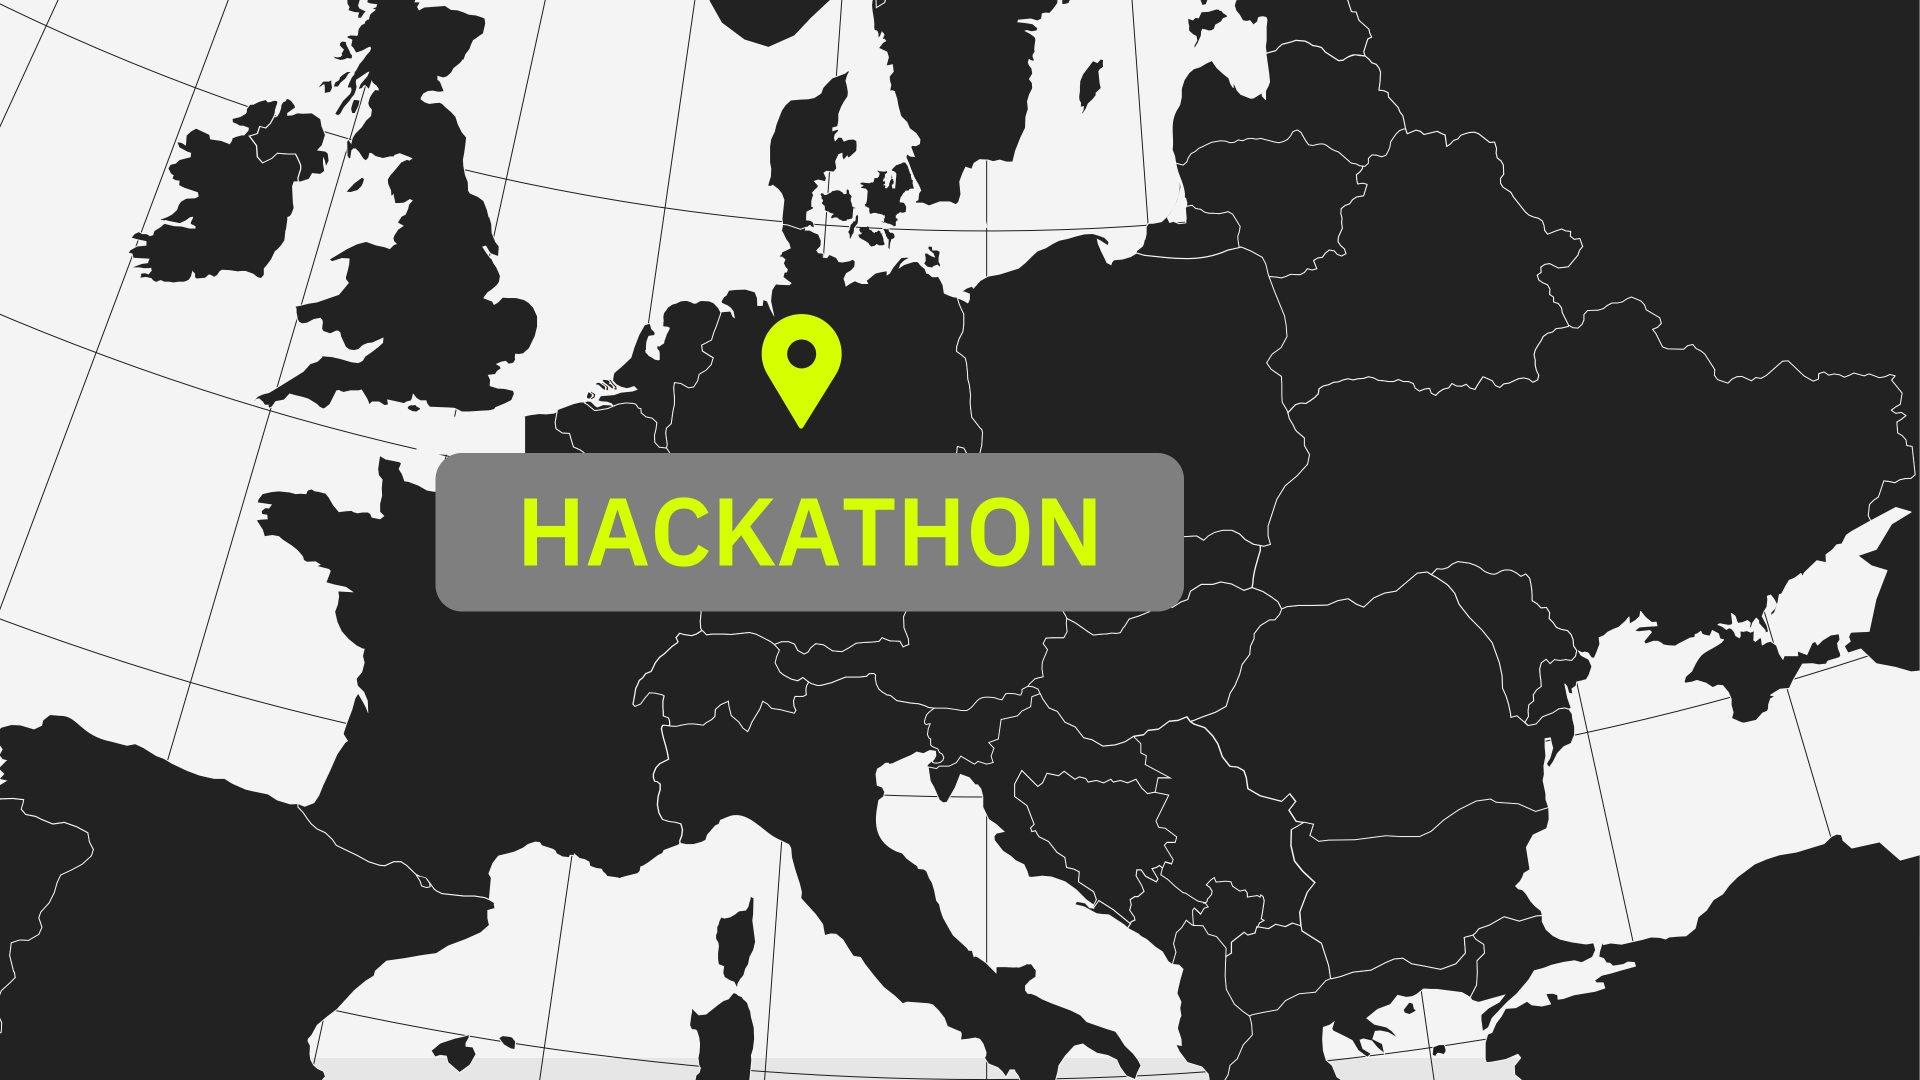 AWA hackathon in Germany soon...